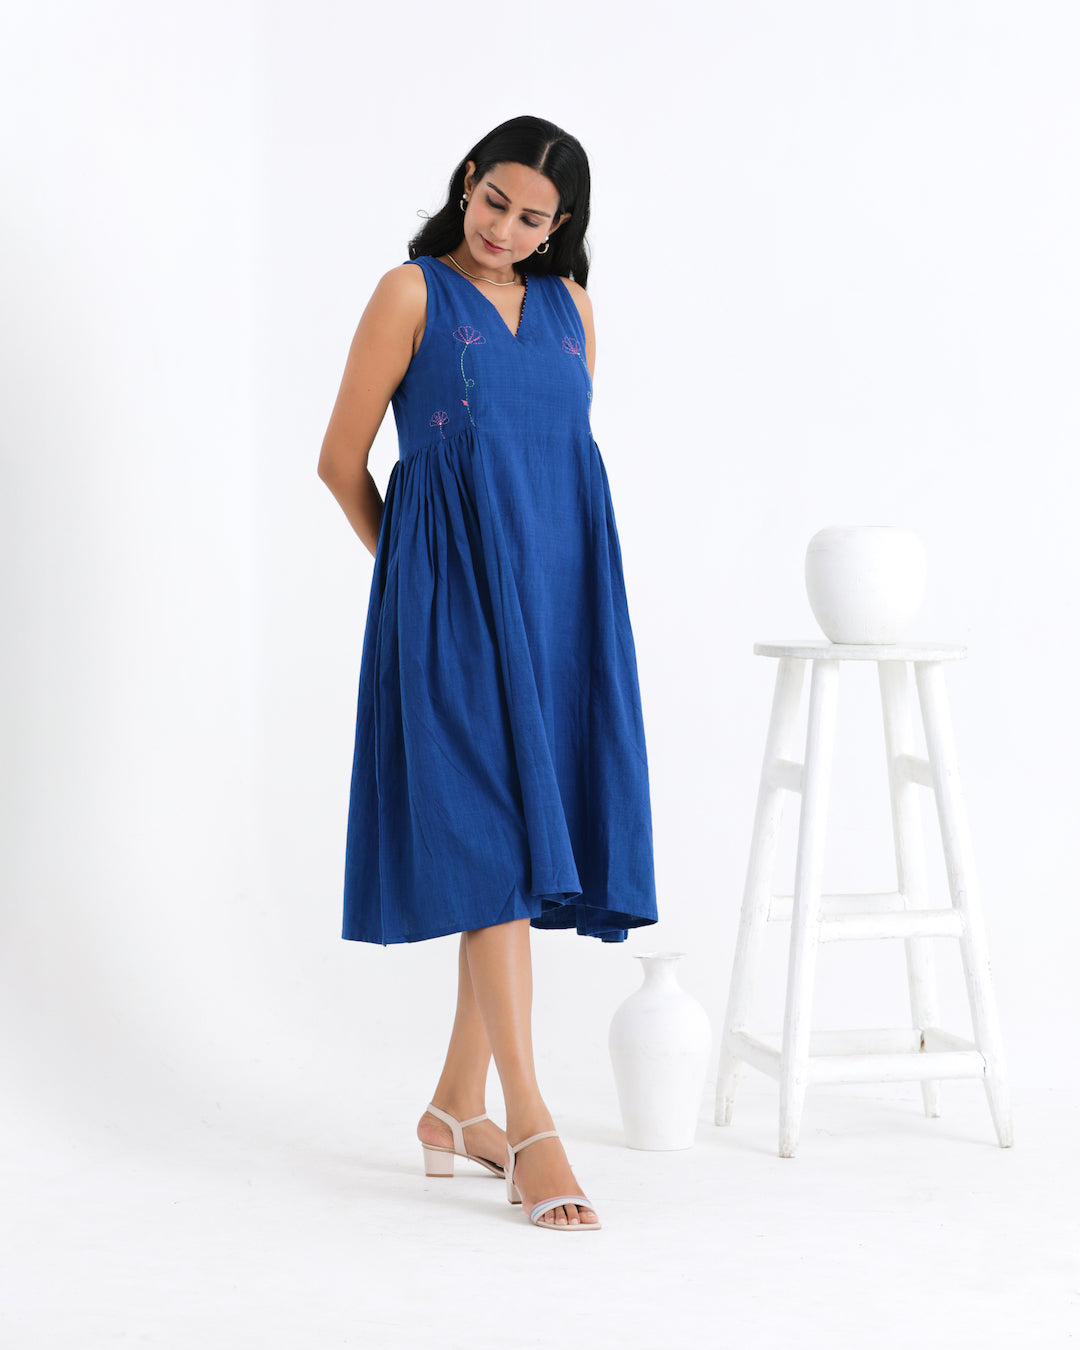 Shop blue embroidered dress from Bebaak